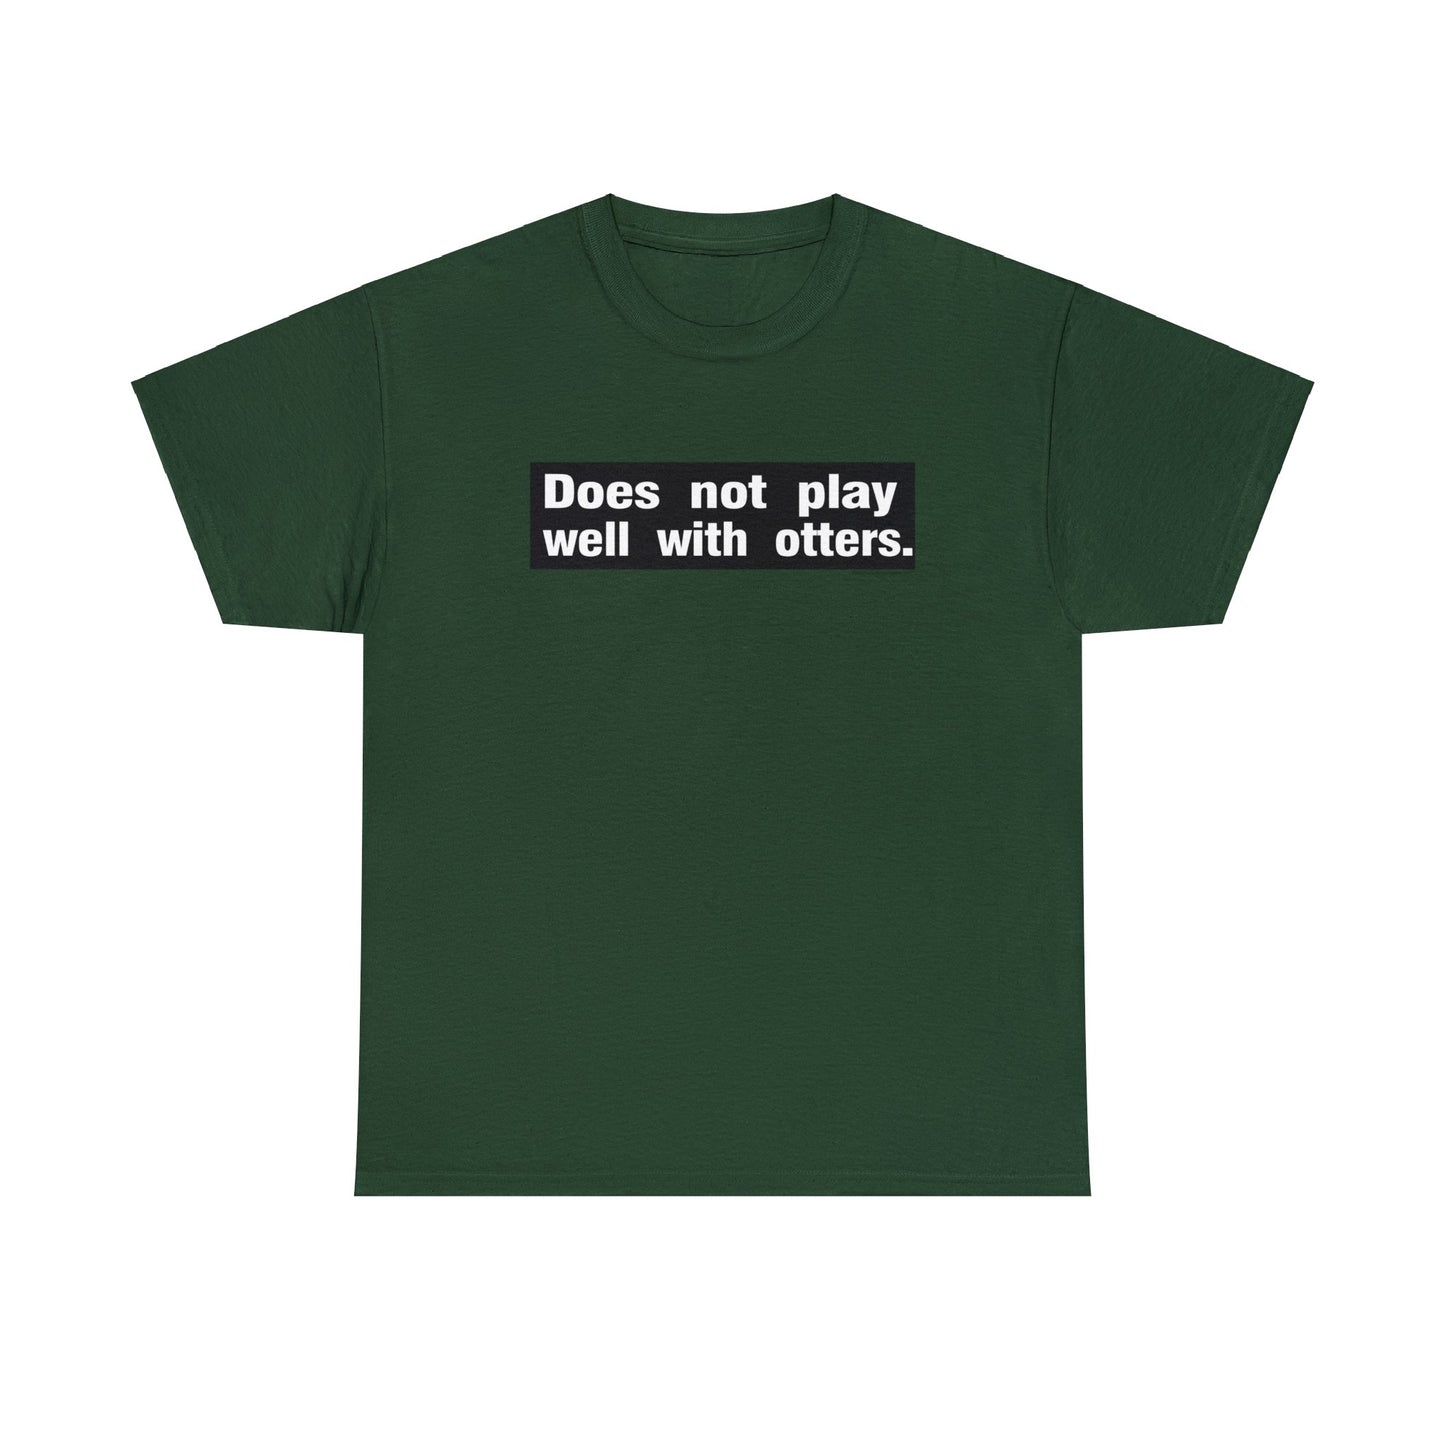 Does Not Play With Otters, funny t-shirt, Pun T-Shirt, Joke Tee, Otter Tee, Ironic Tee, humorous t-shirt, satirical t-shirt, t-shirt gift